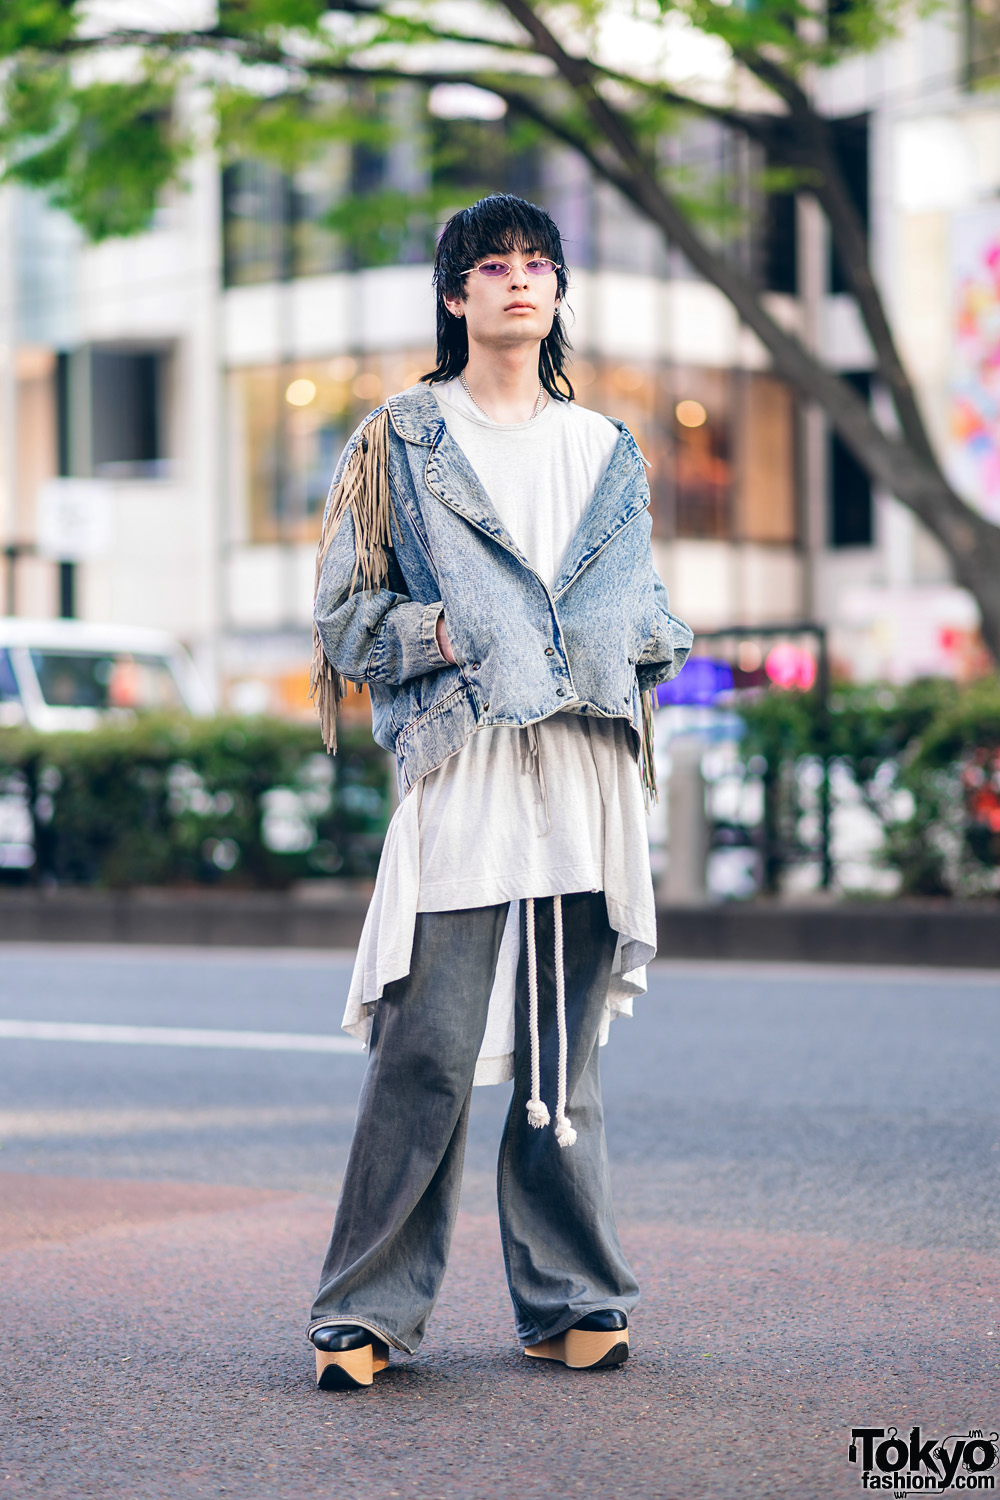 Denim Streetwear in Harajuku w/ Shaggy Hair, Purple Sunglasses, Fringed Jacket, Ralph Lauren Flared Pants & Vivienne Westwood Rocking Horse Shoes